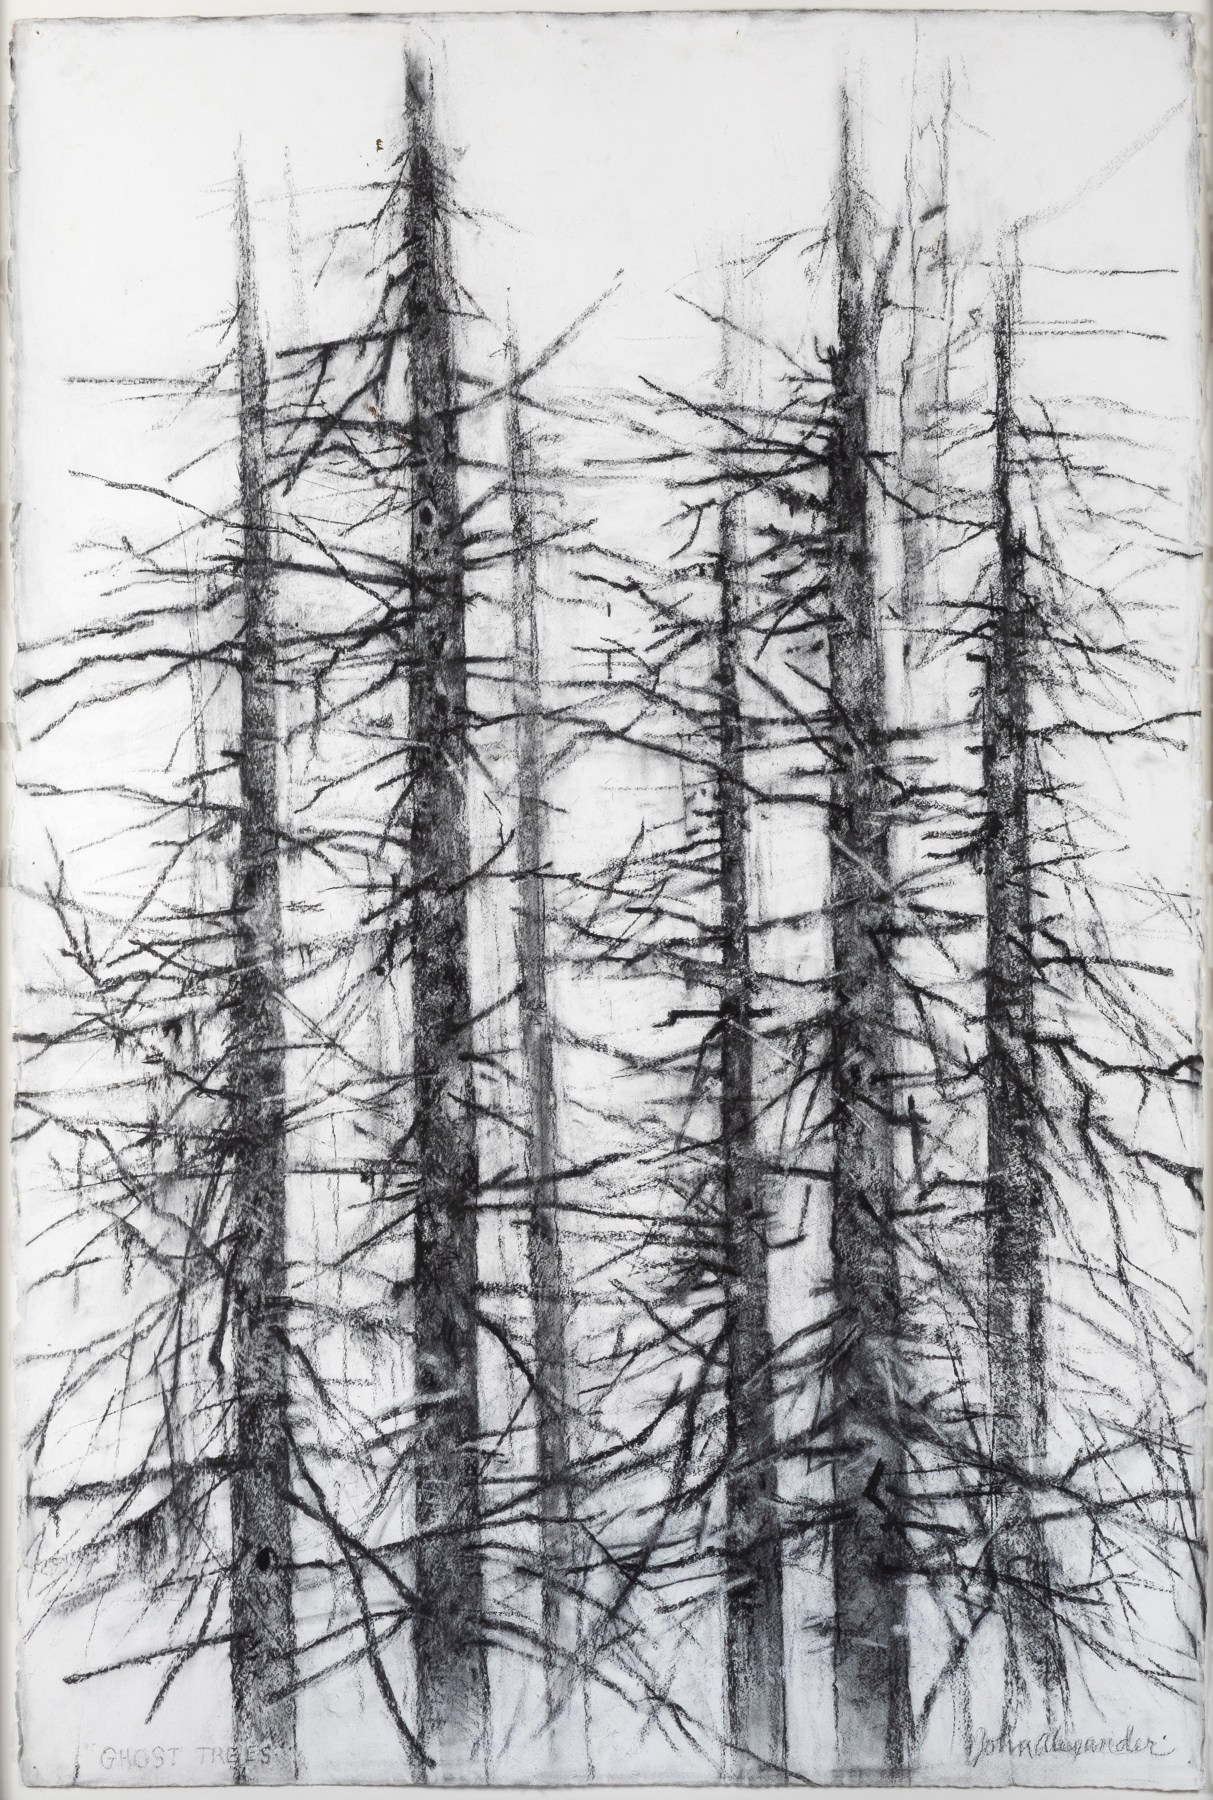 John Alexander Ghost Trees, 2019